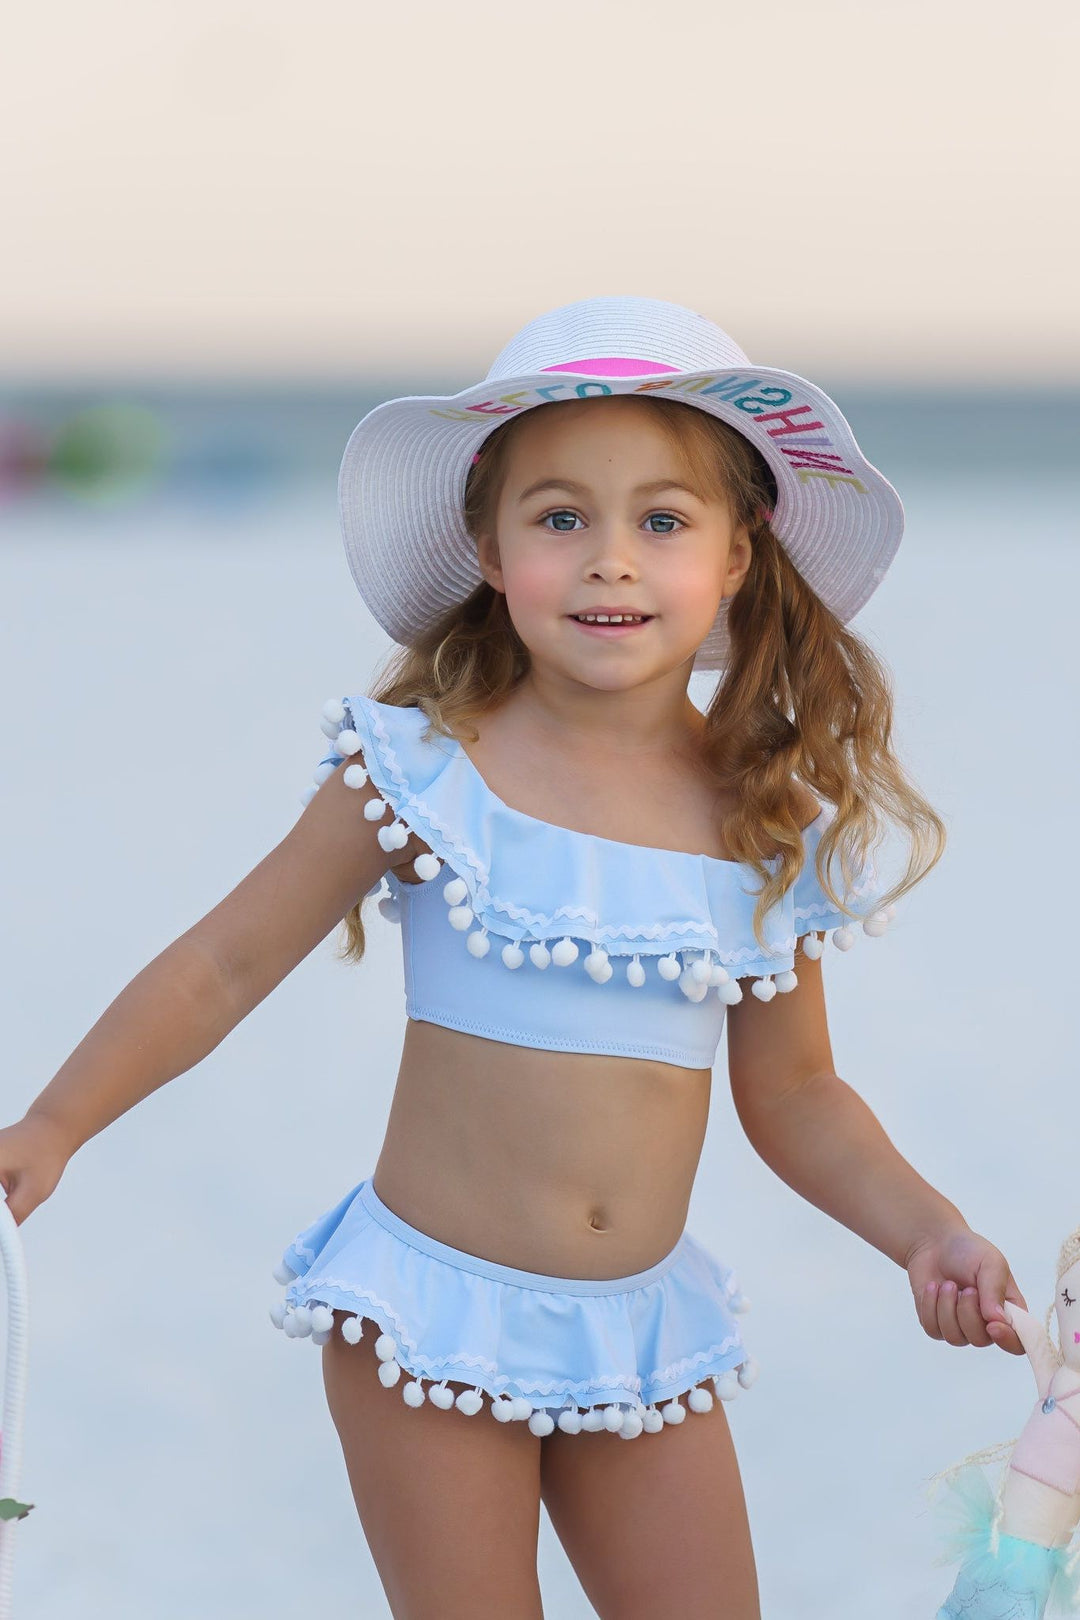 Blue & White Pom-Pom Two- Piece Girls Swimsuit - Trendy Bathing Suit for Cruise Wear & Summer Fun| Girls' Swimwear - Sophia Rose Children's Boutique